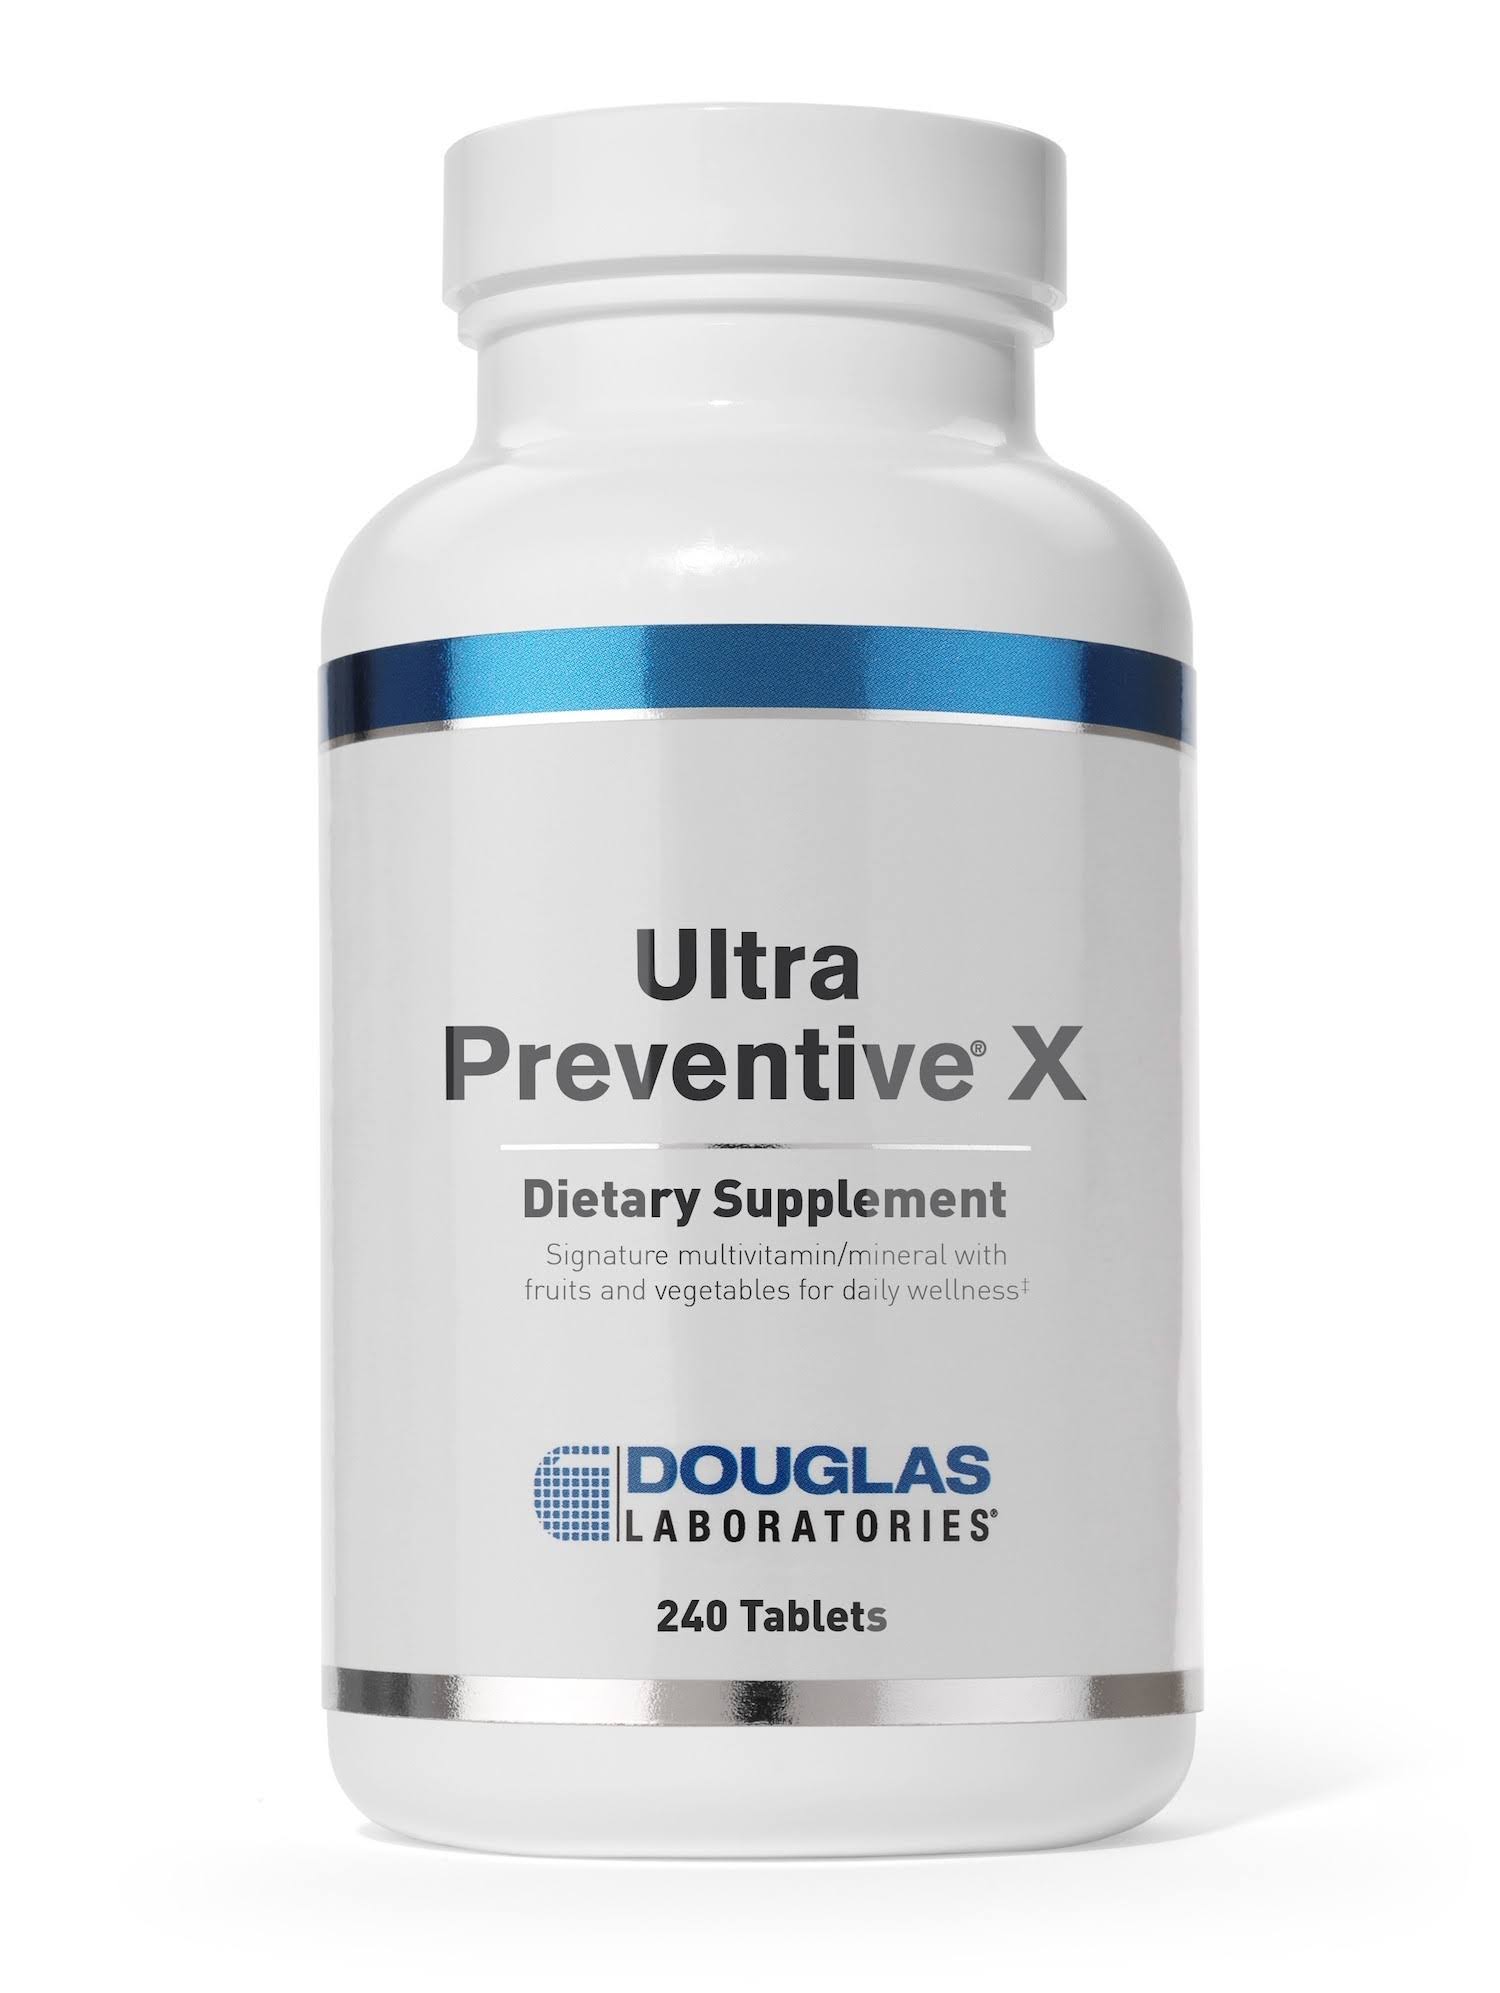 Douglas Laboratories - Ultra Preventive X - 240 Tablets